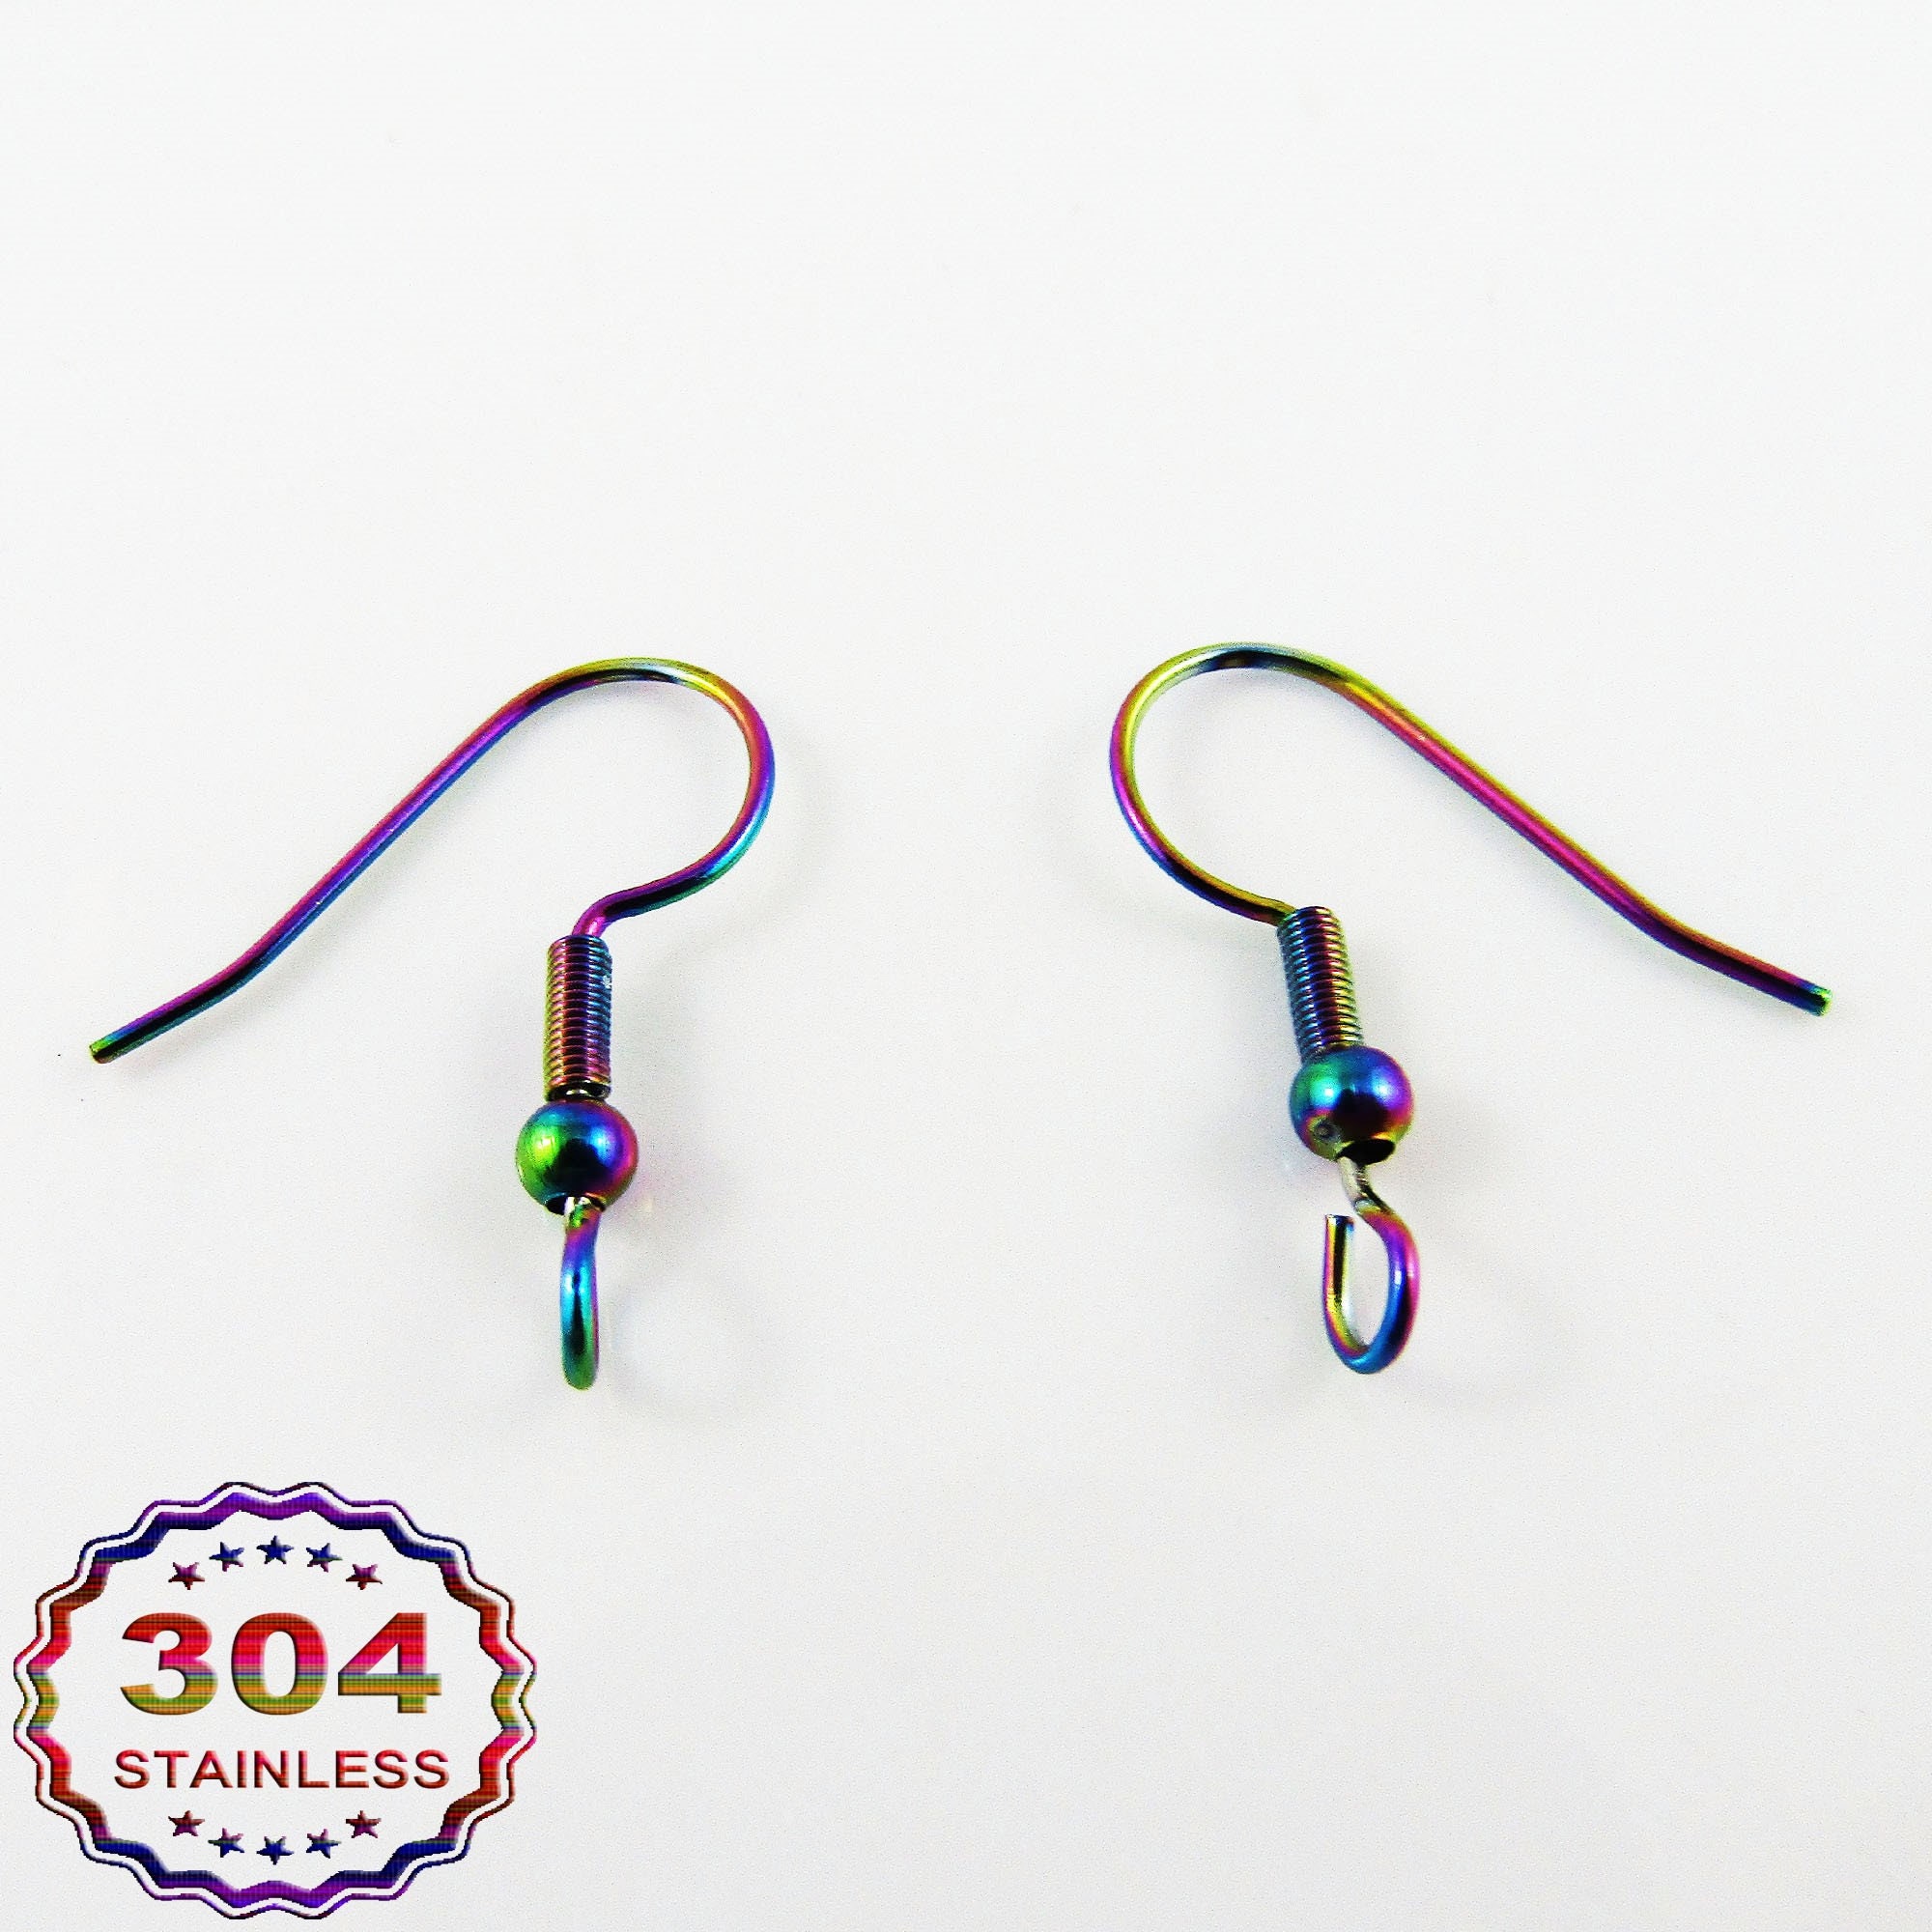 Bulk 200pce (100 pair) DIY Silver Earring Hook Finding 18x18mm 0.8mm